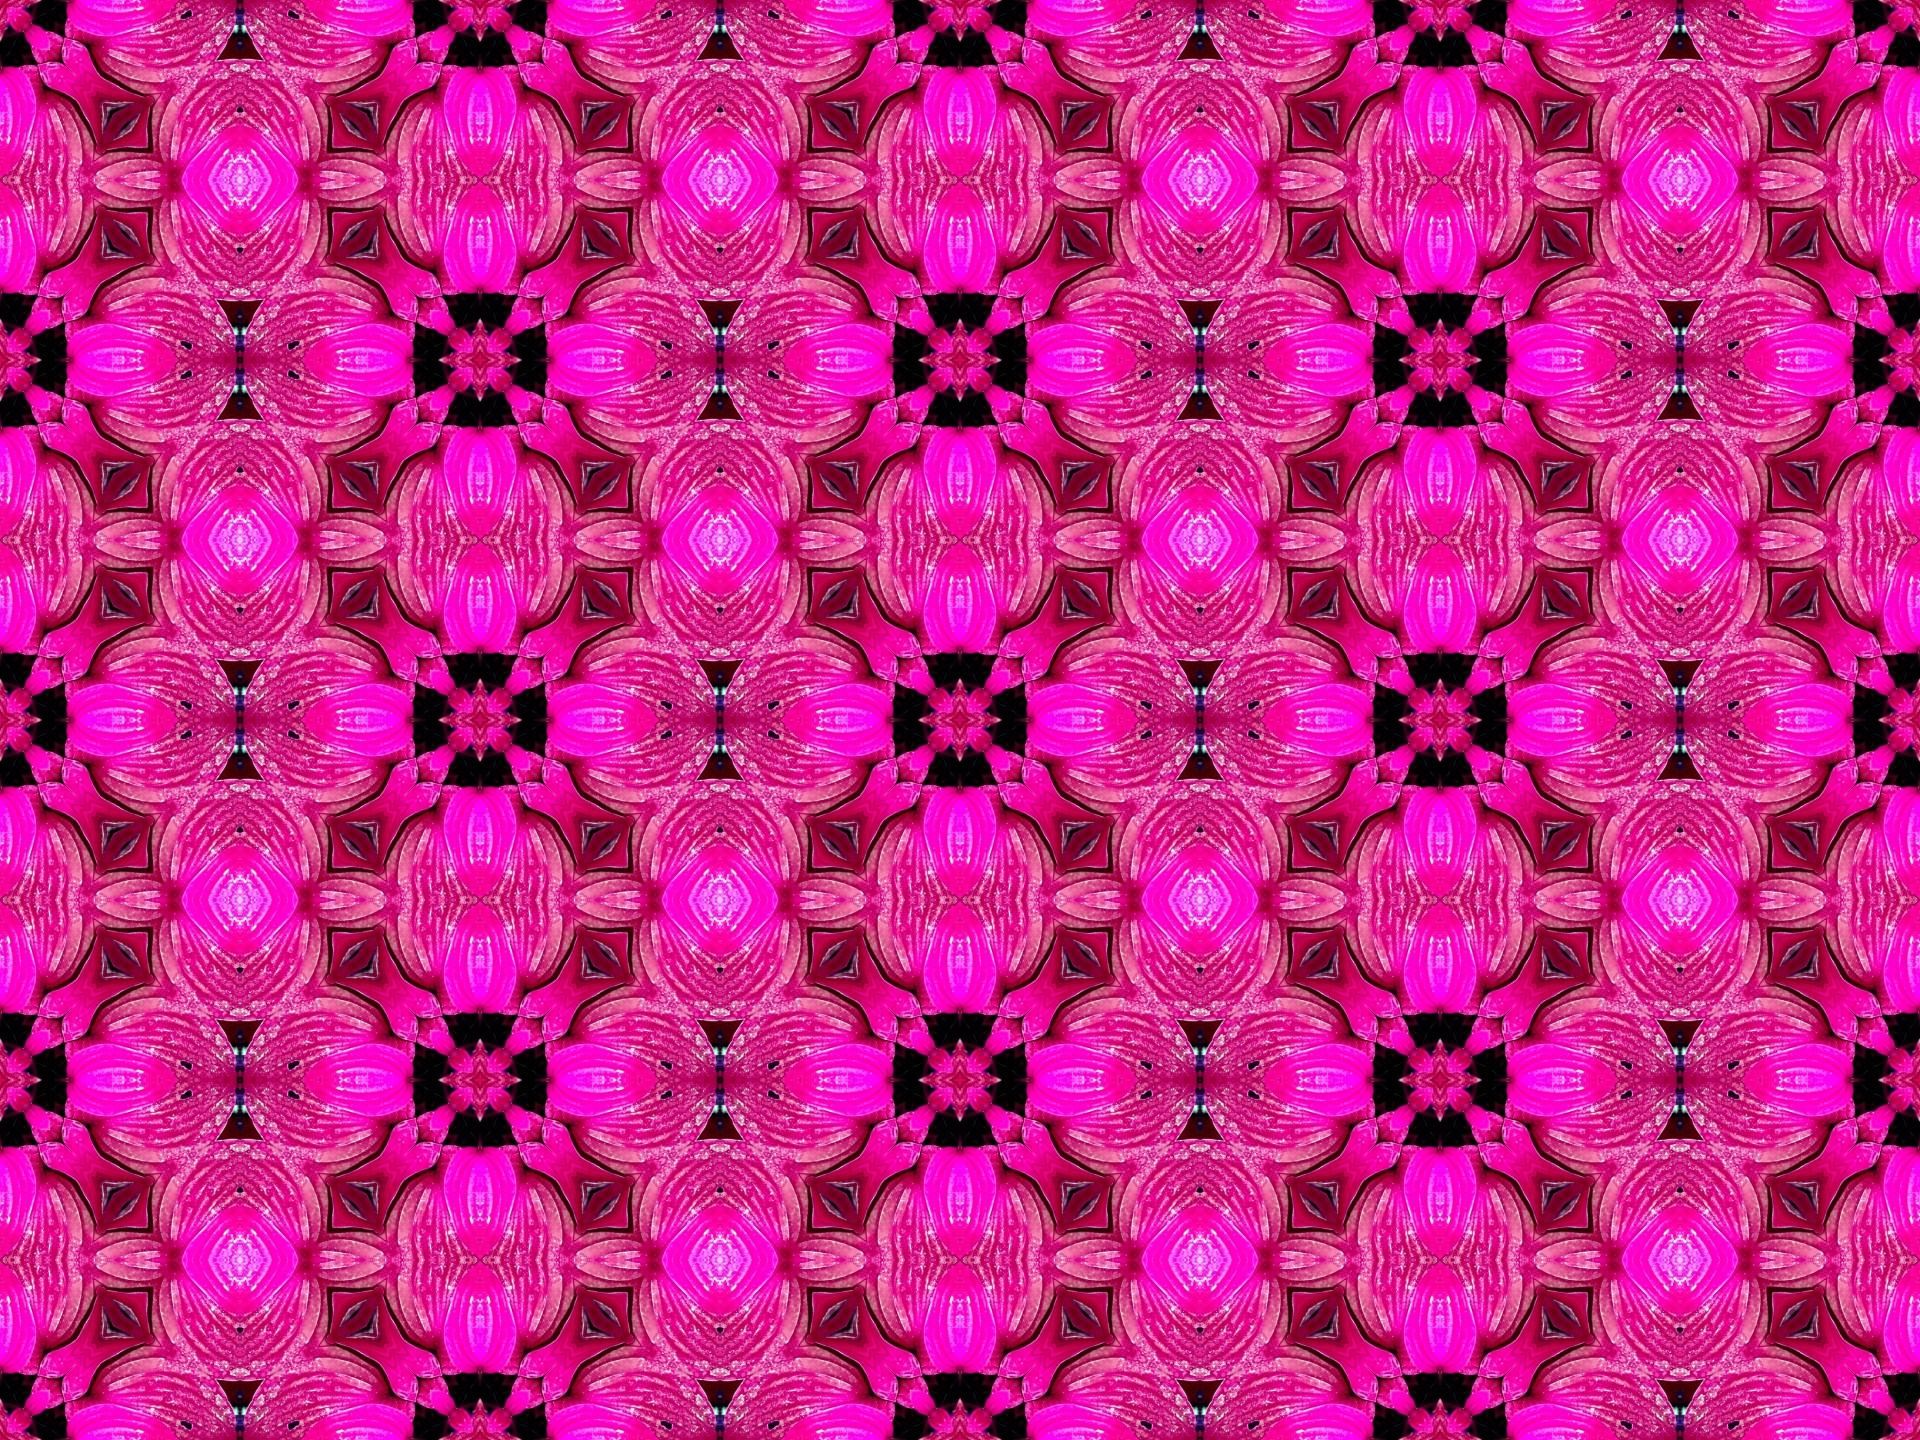 Rosa geometrische nahtlose Muster